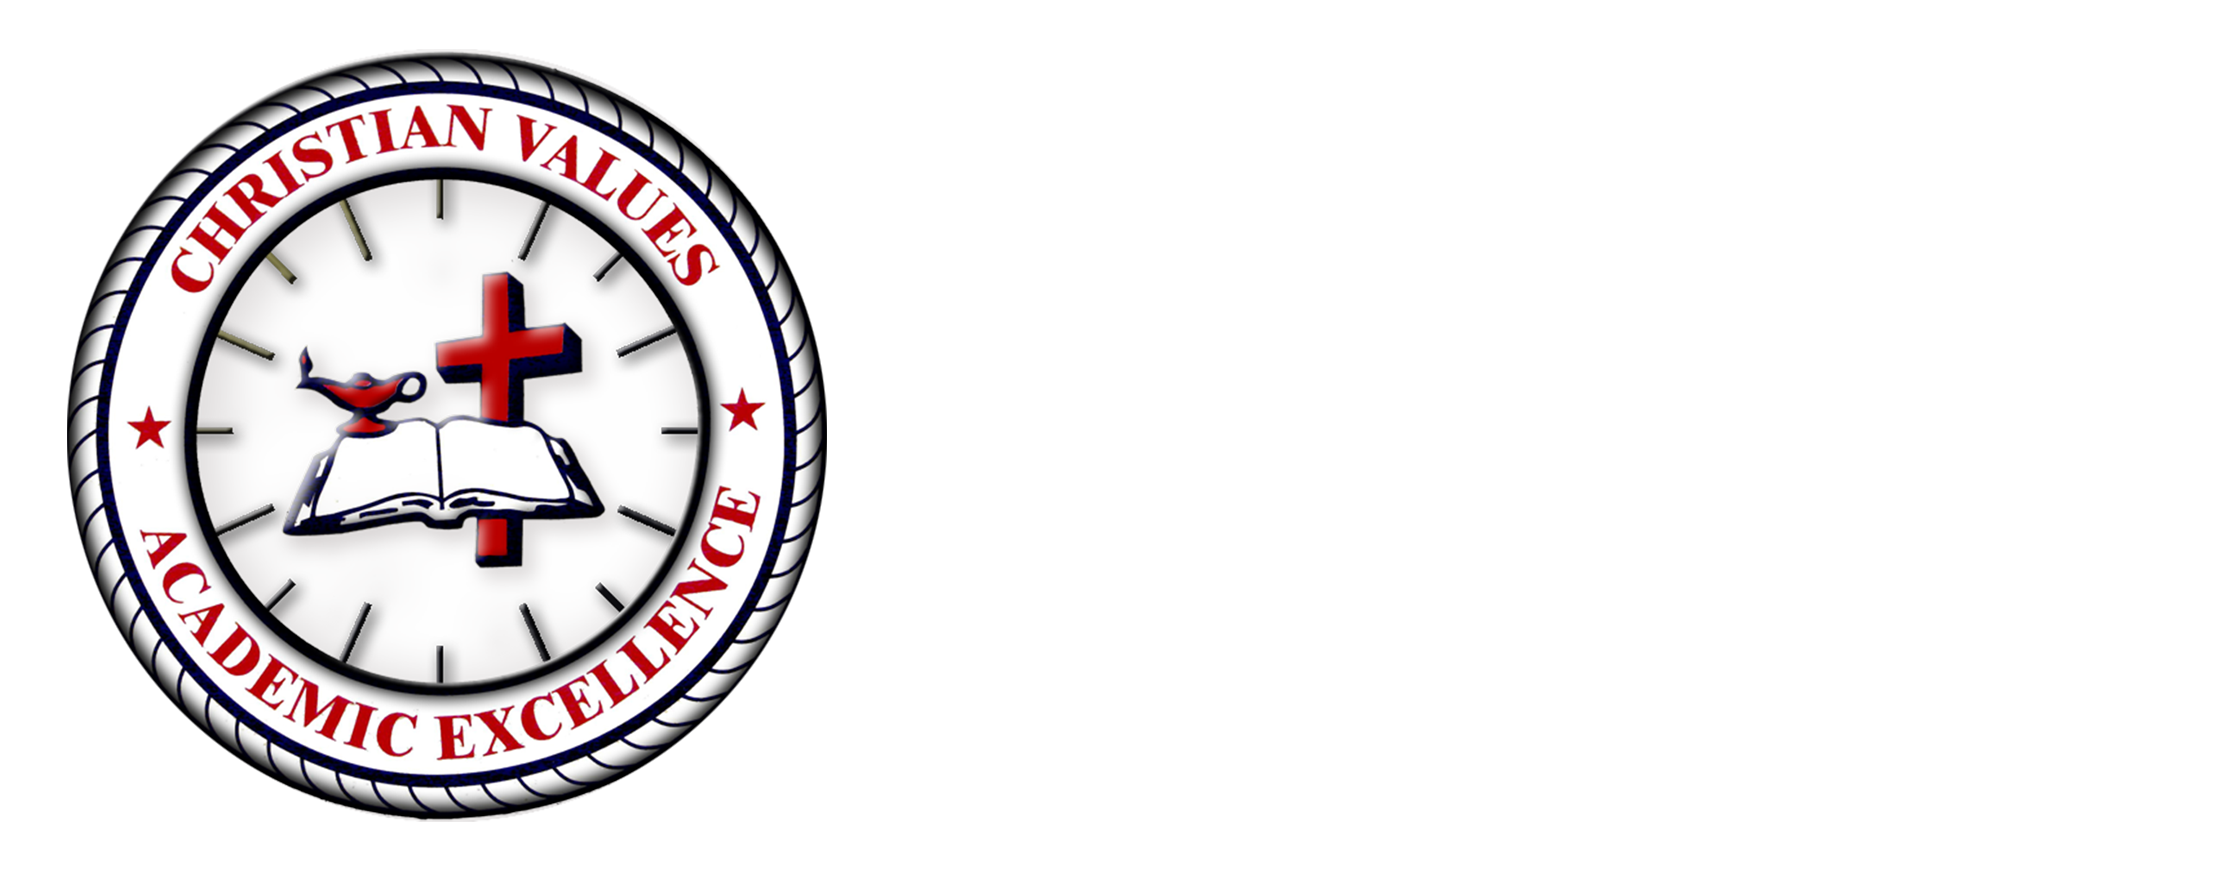 Bay Area Christian School